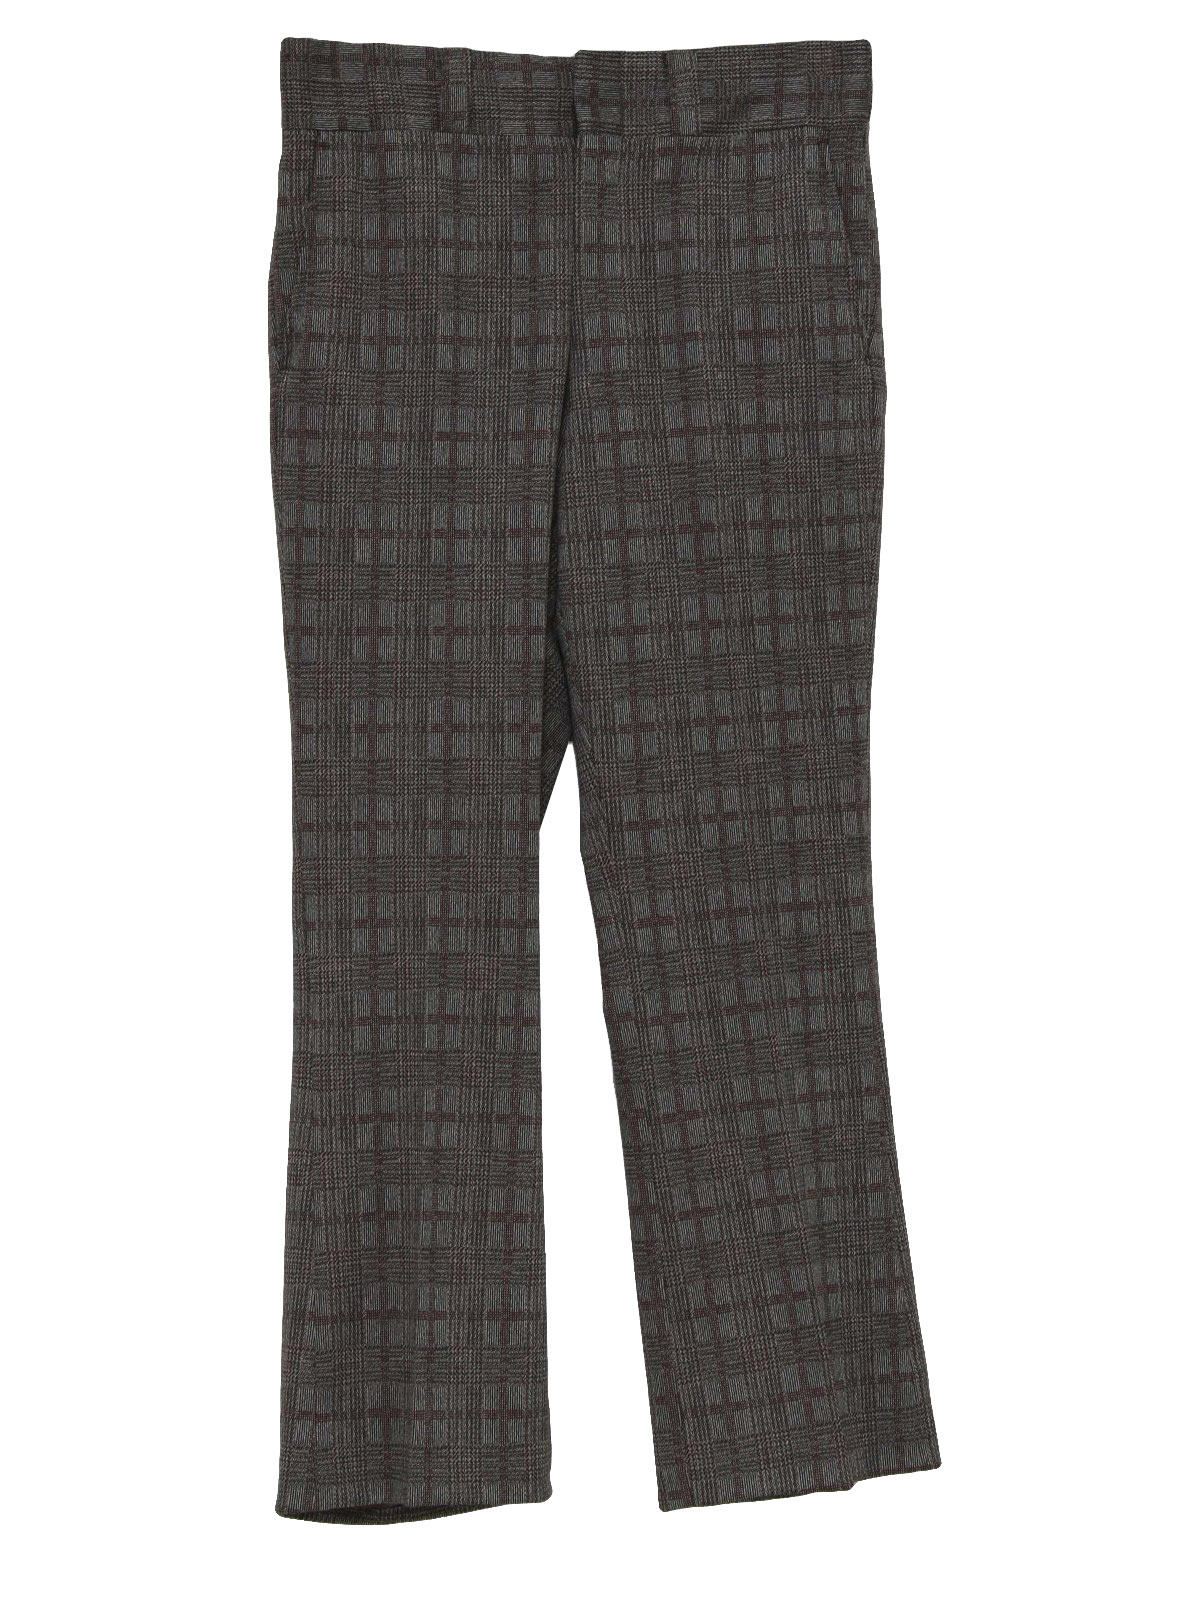 1970s Vintage Flared Pants / Flares: 70s -No Label- Mens heather grays ...